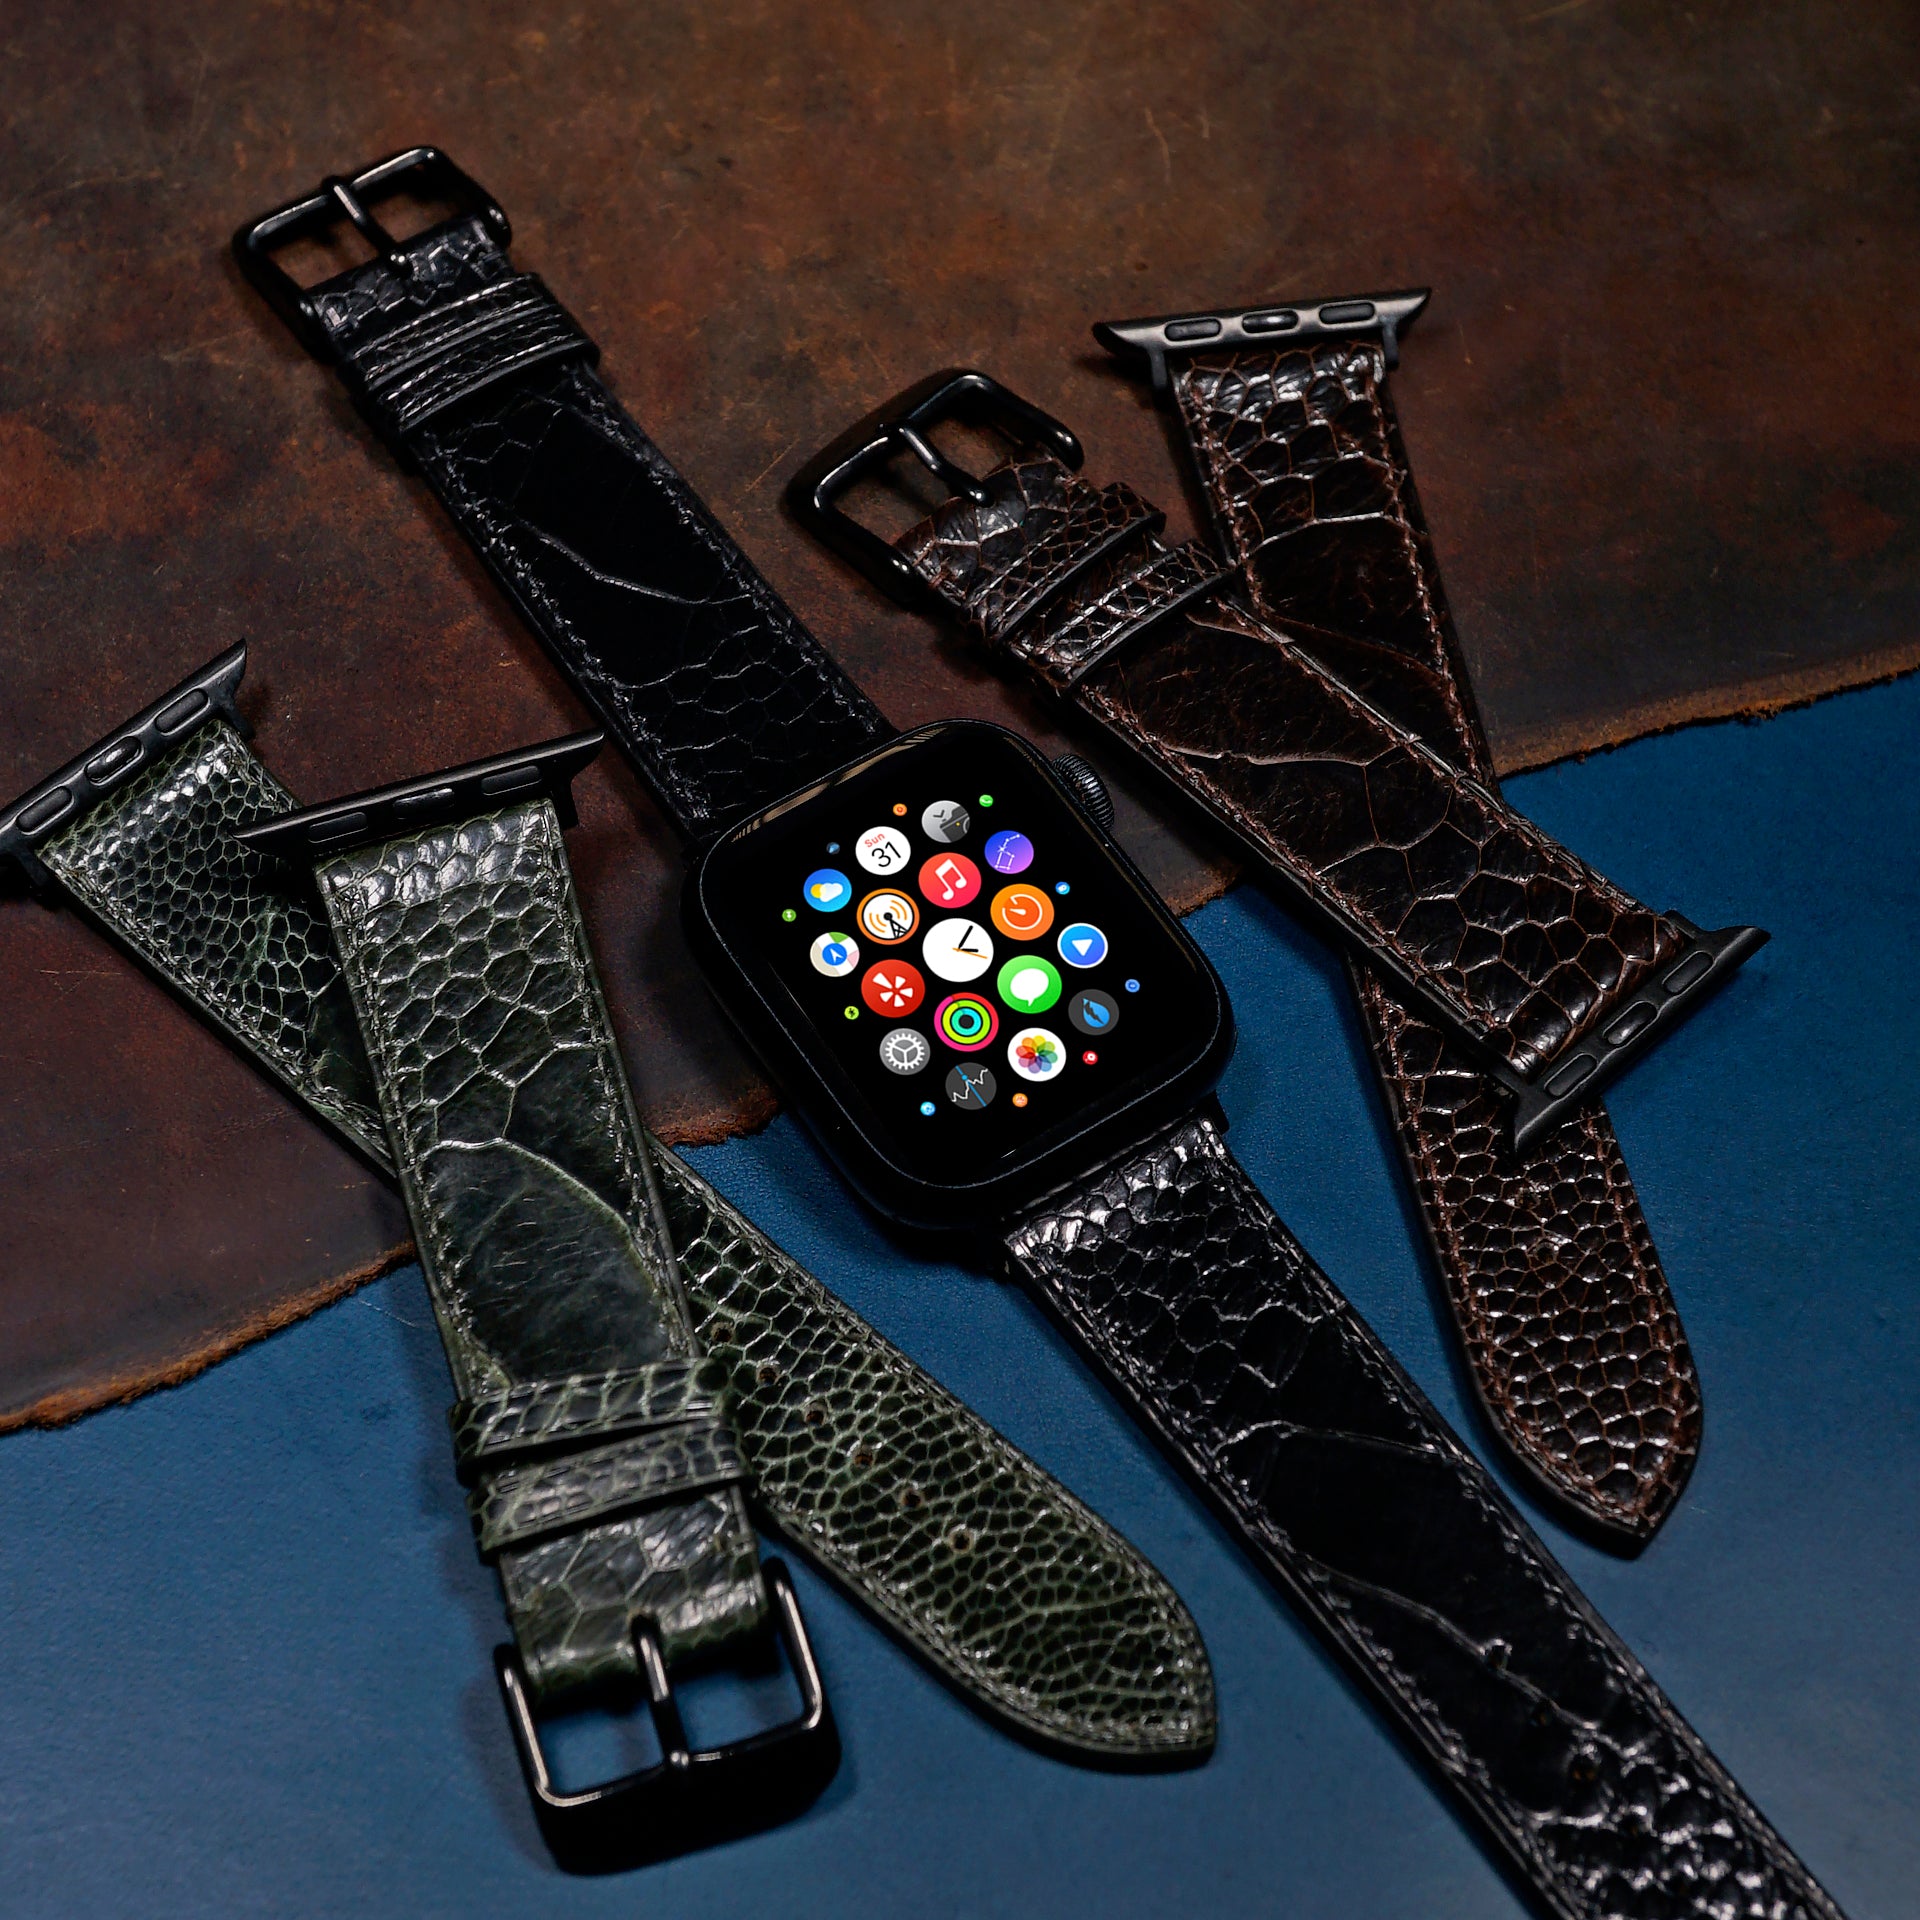 Ostrich Leather Watch Strap in Black (Apple Watch)